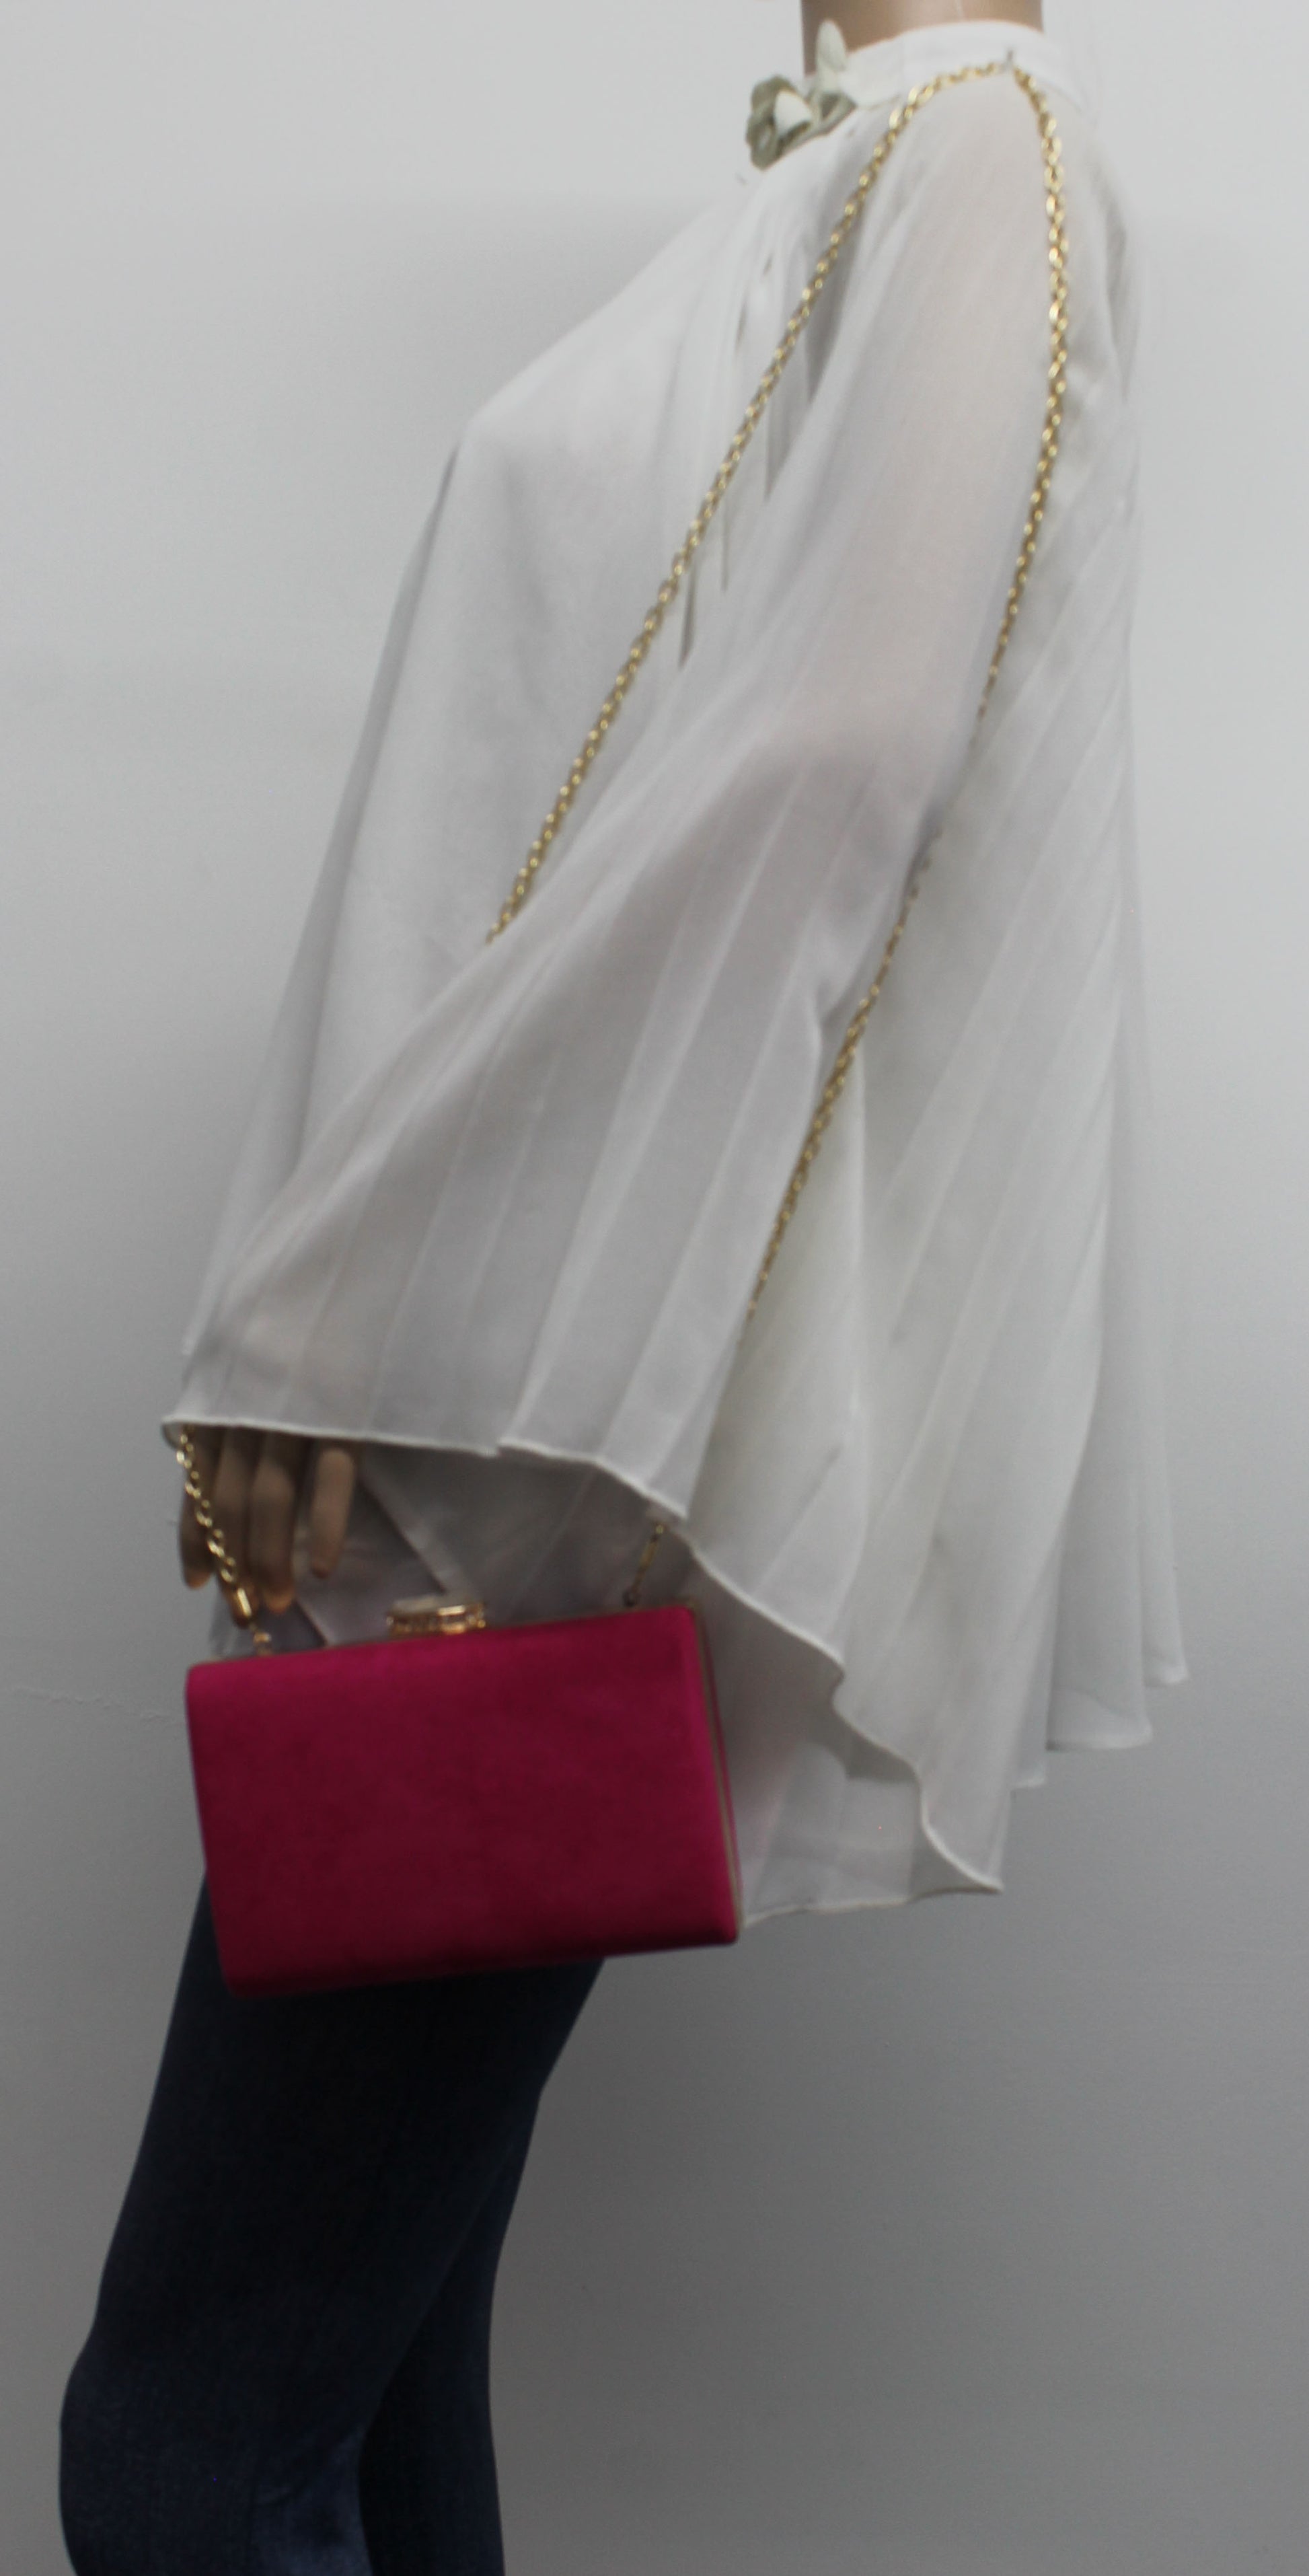 SWANKYSWANS Surrey Suede Clutch Bag Rose Cute Cheap Clutch Bag For Weddings School and Work